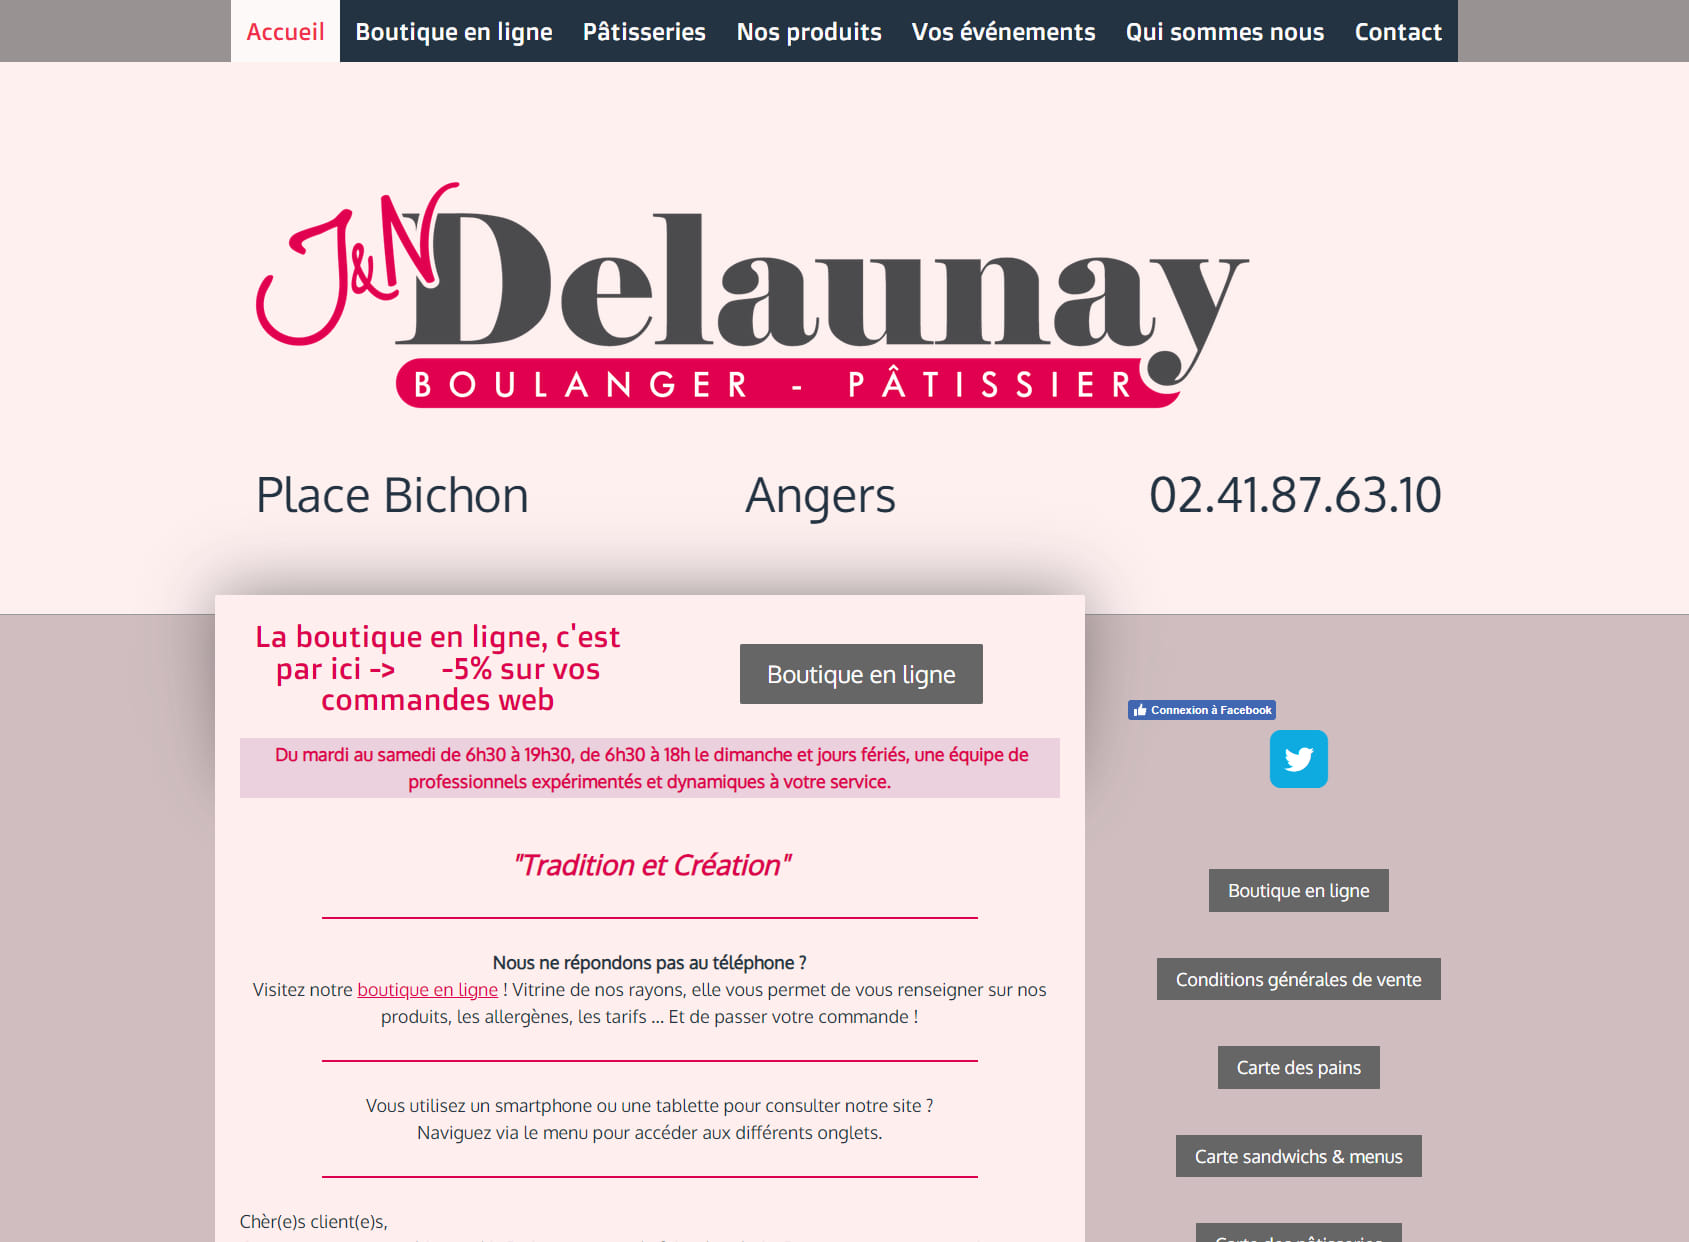 Boulangerie Delaunay